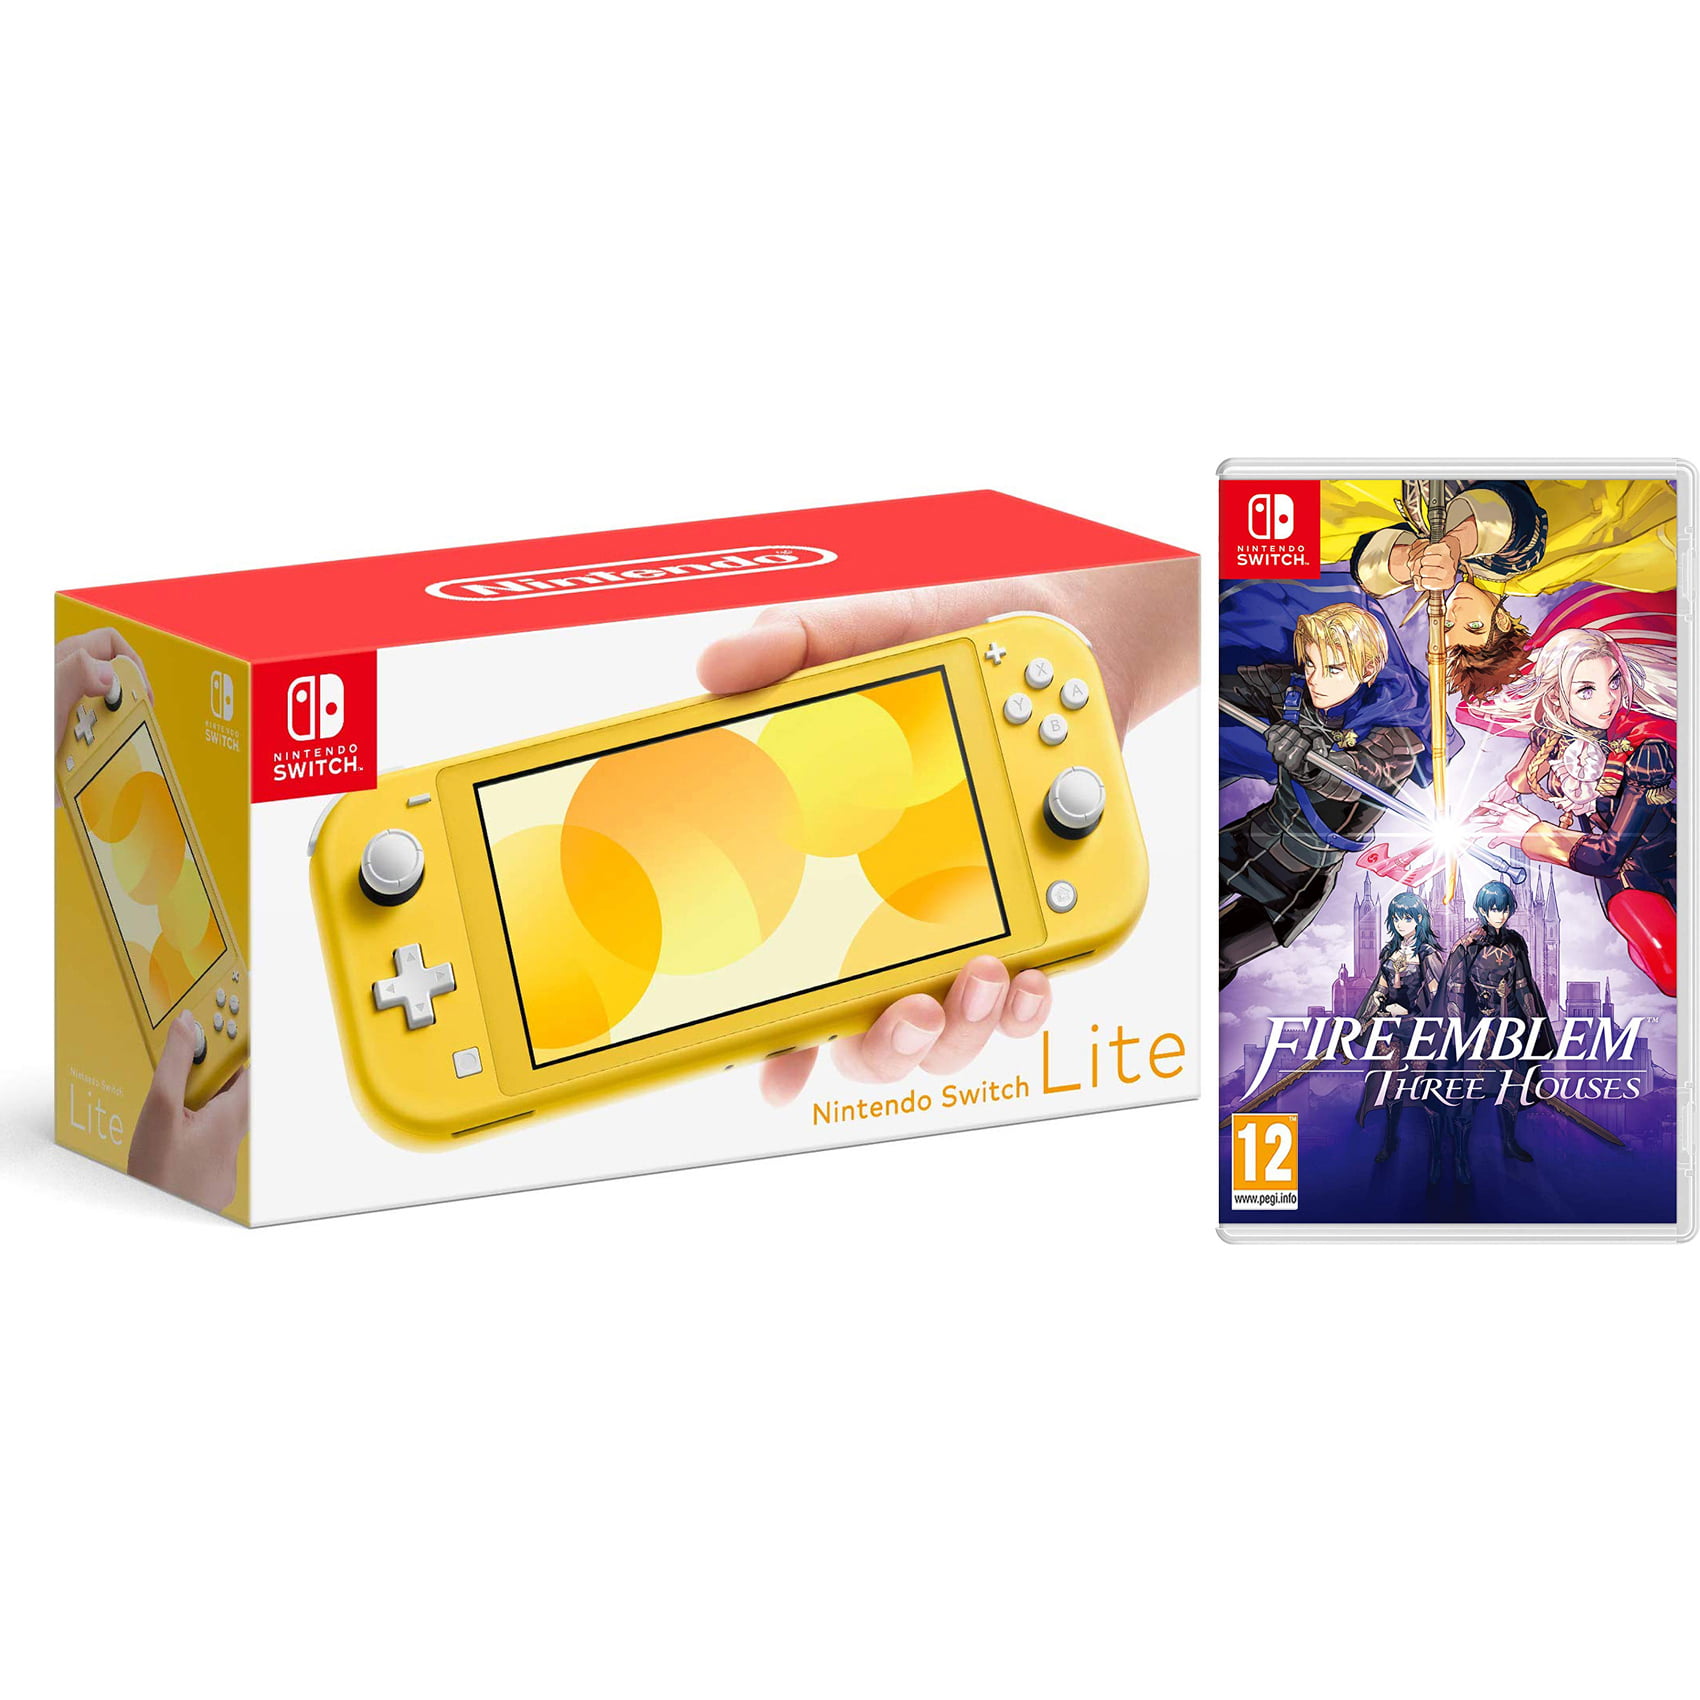 Nintendo Switch Lite 32GB Yellow and Mario Kart 8 Bundle - Import